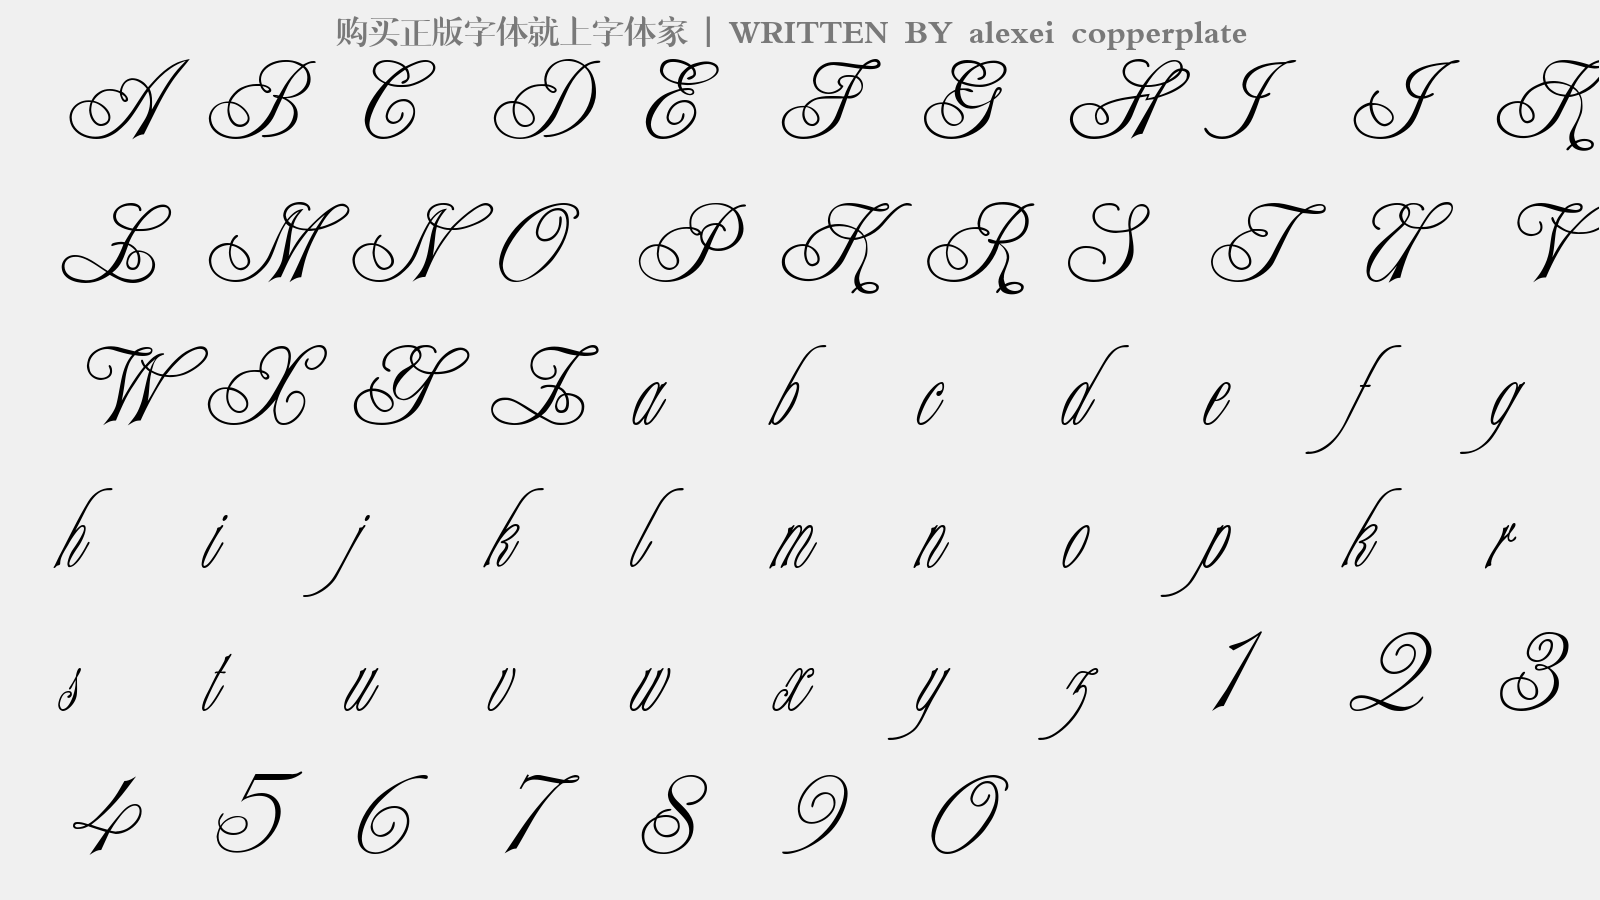 alexei copperplate - 大写字母/小写字母/数字